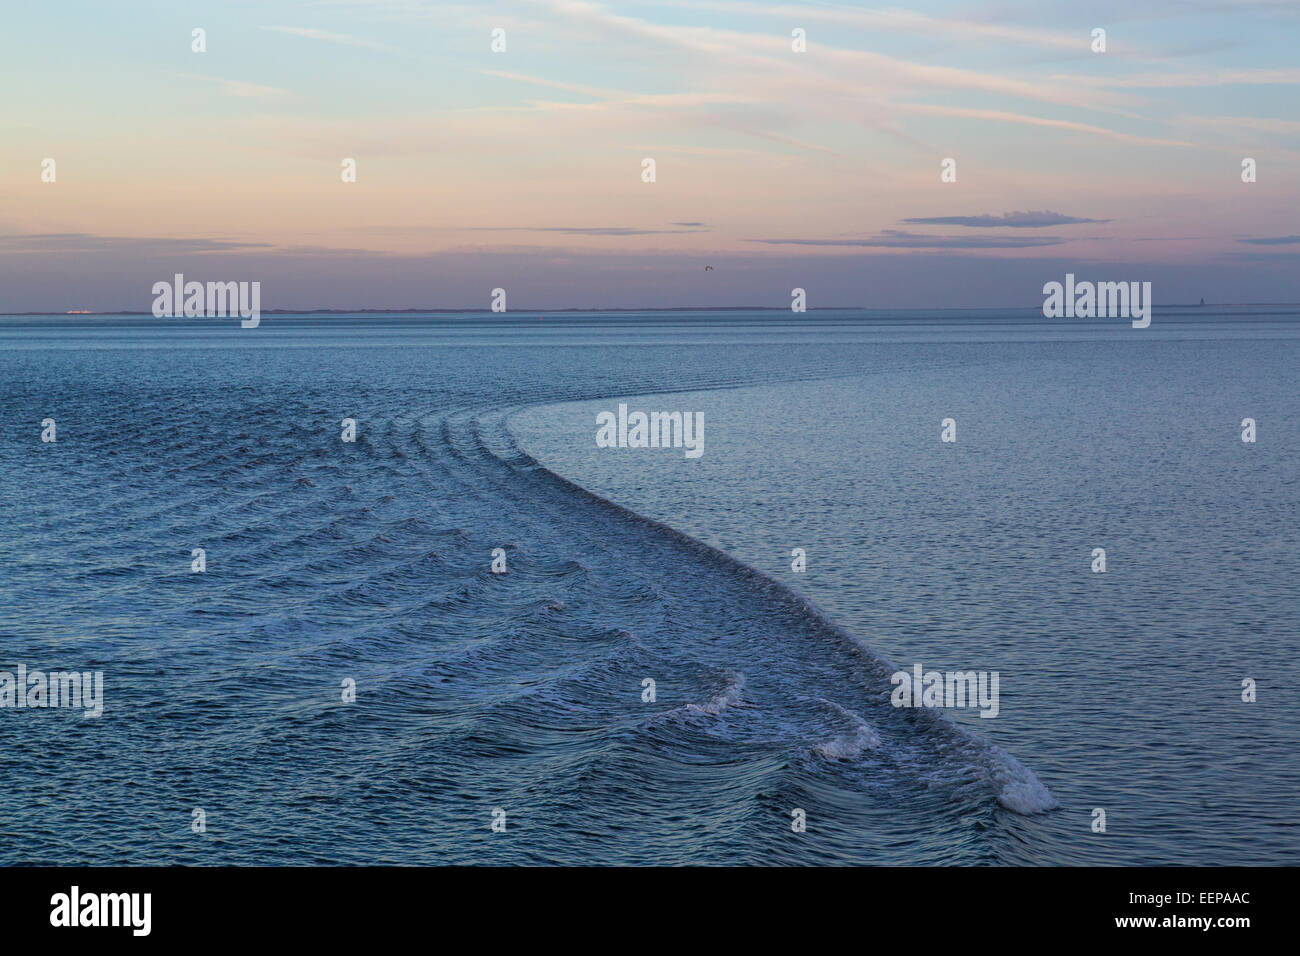 Wadden Sea, North Sea island Spiekeroog, ferry pulls a slight wave on the calm sea, at high tide Stock Photo